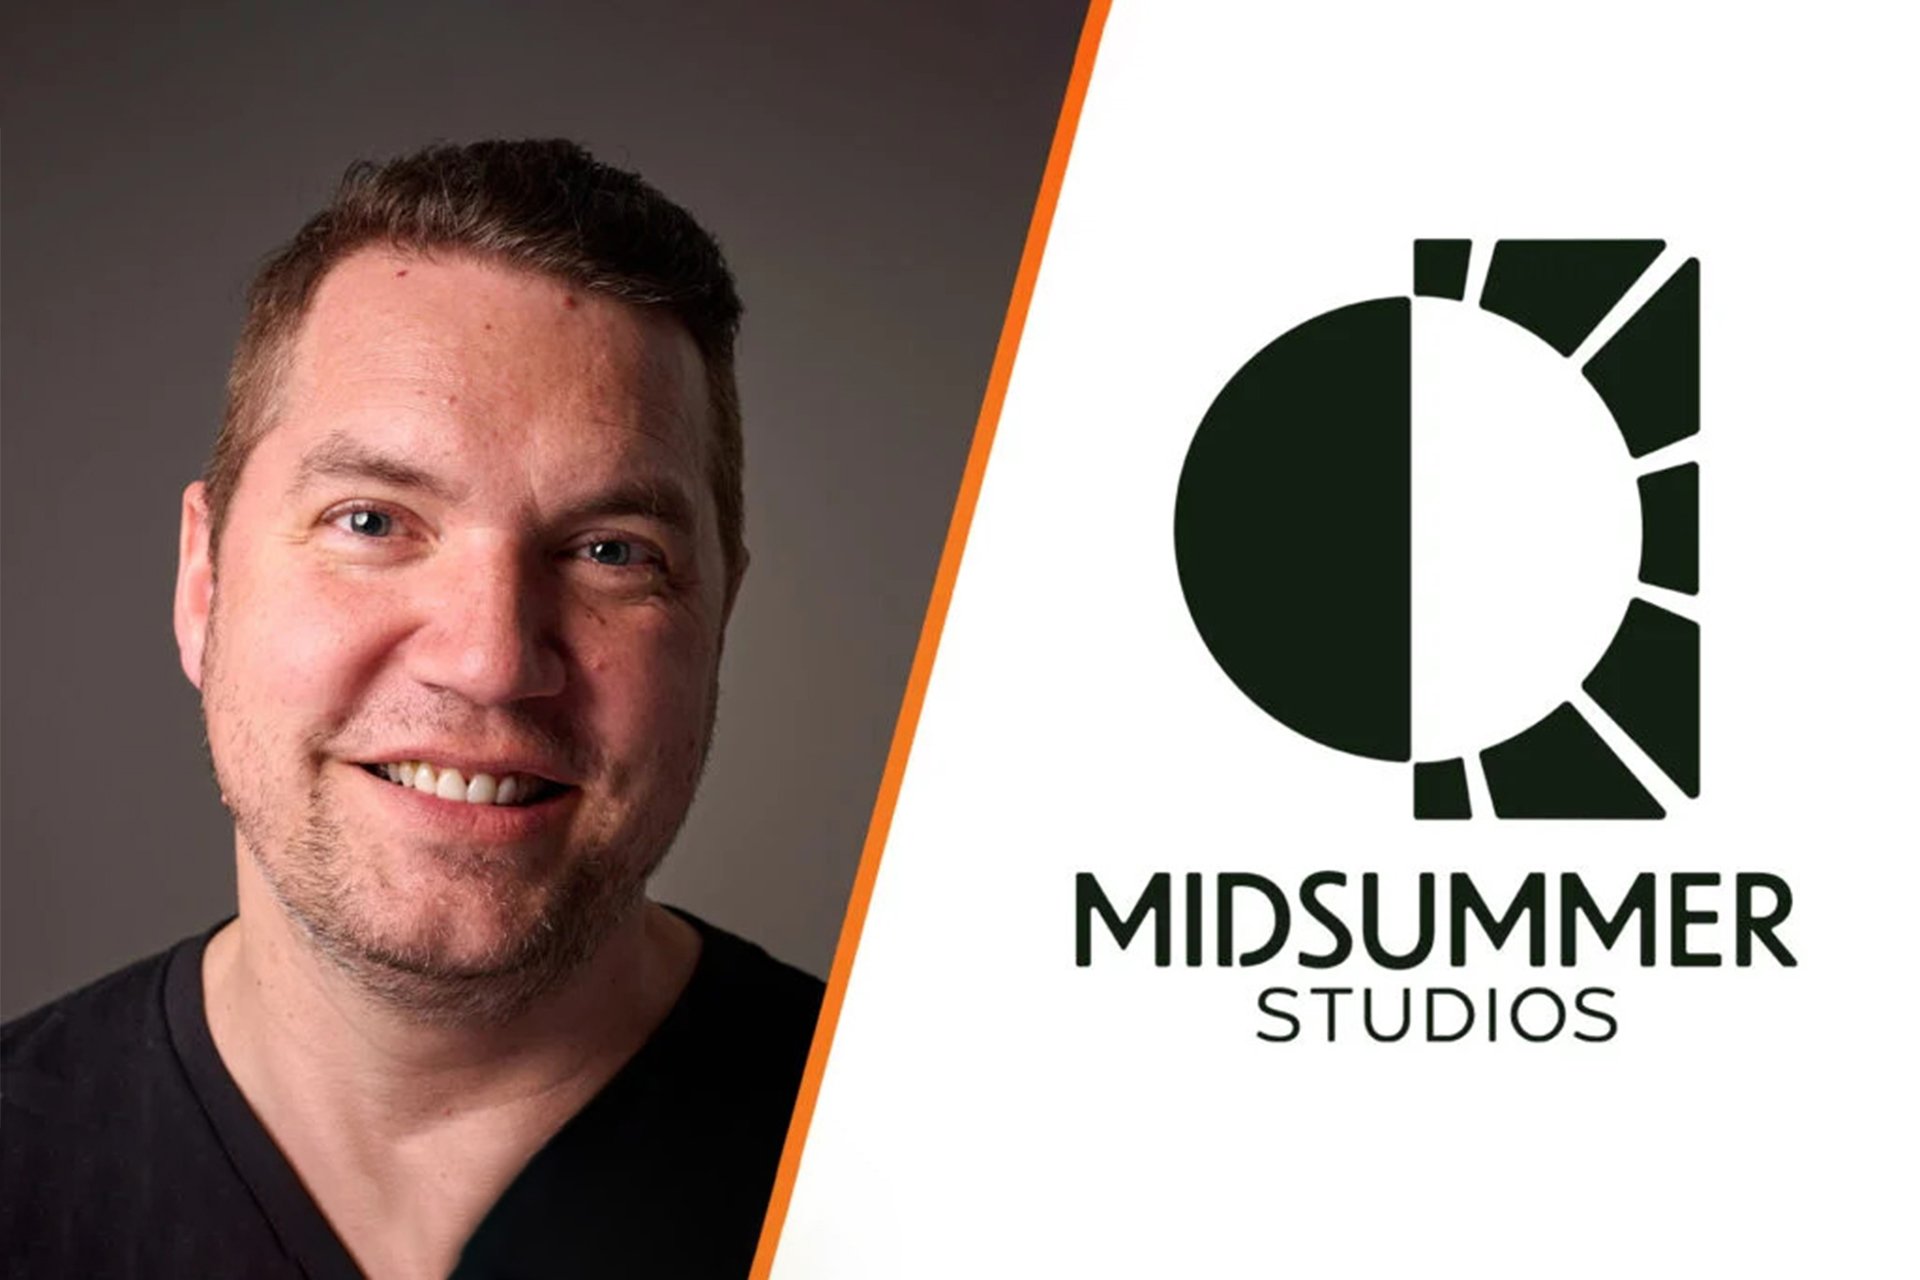 Midsummer Studio announced